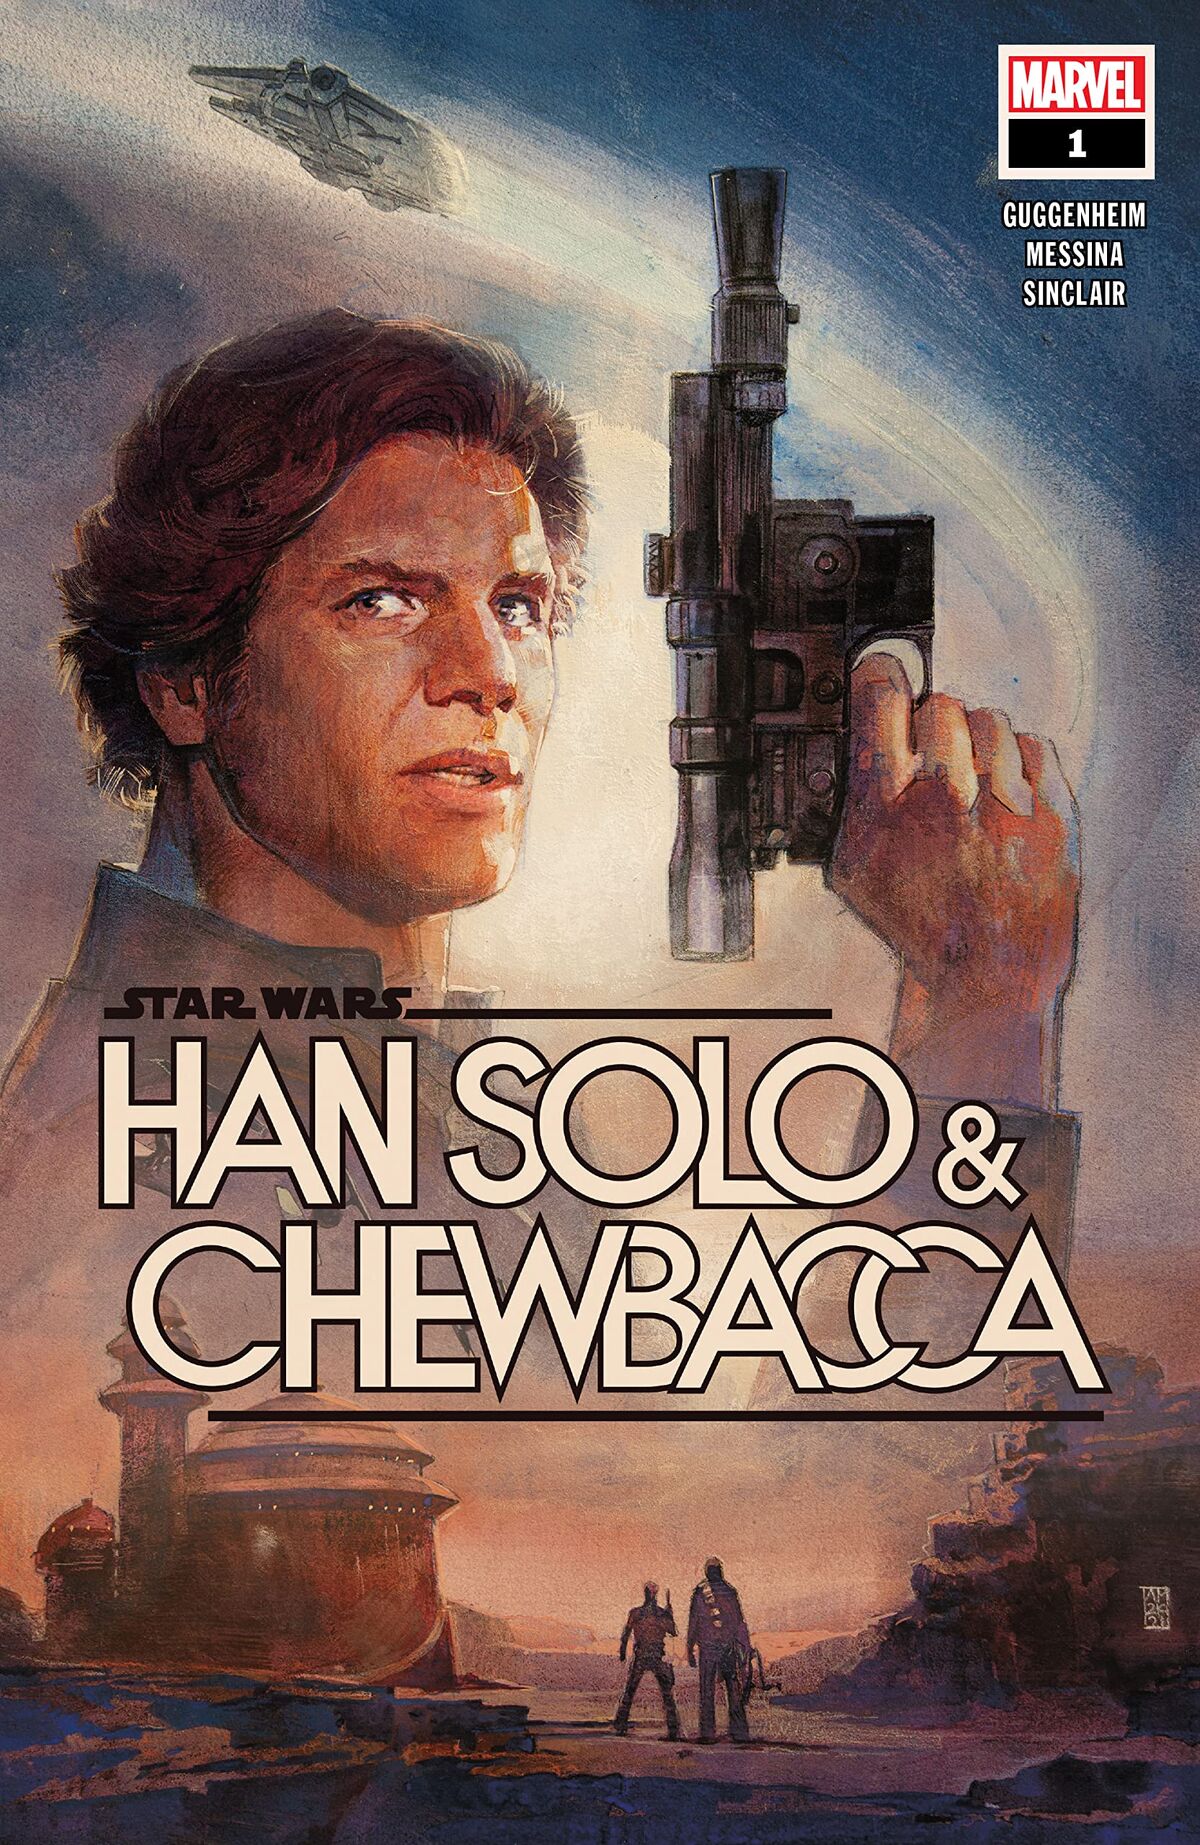 Planeta Chewbacca: Recomendação #01: Katekyo Hitman Reborn